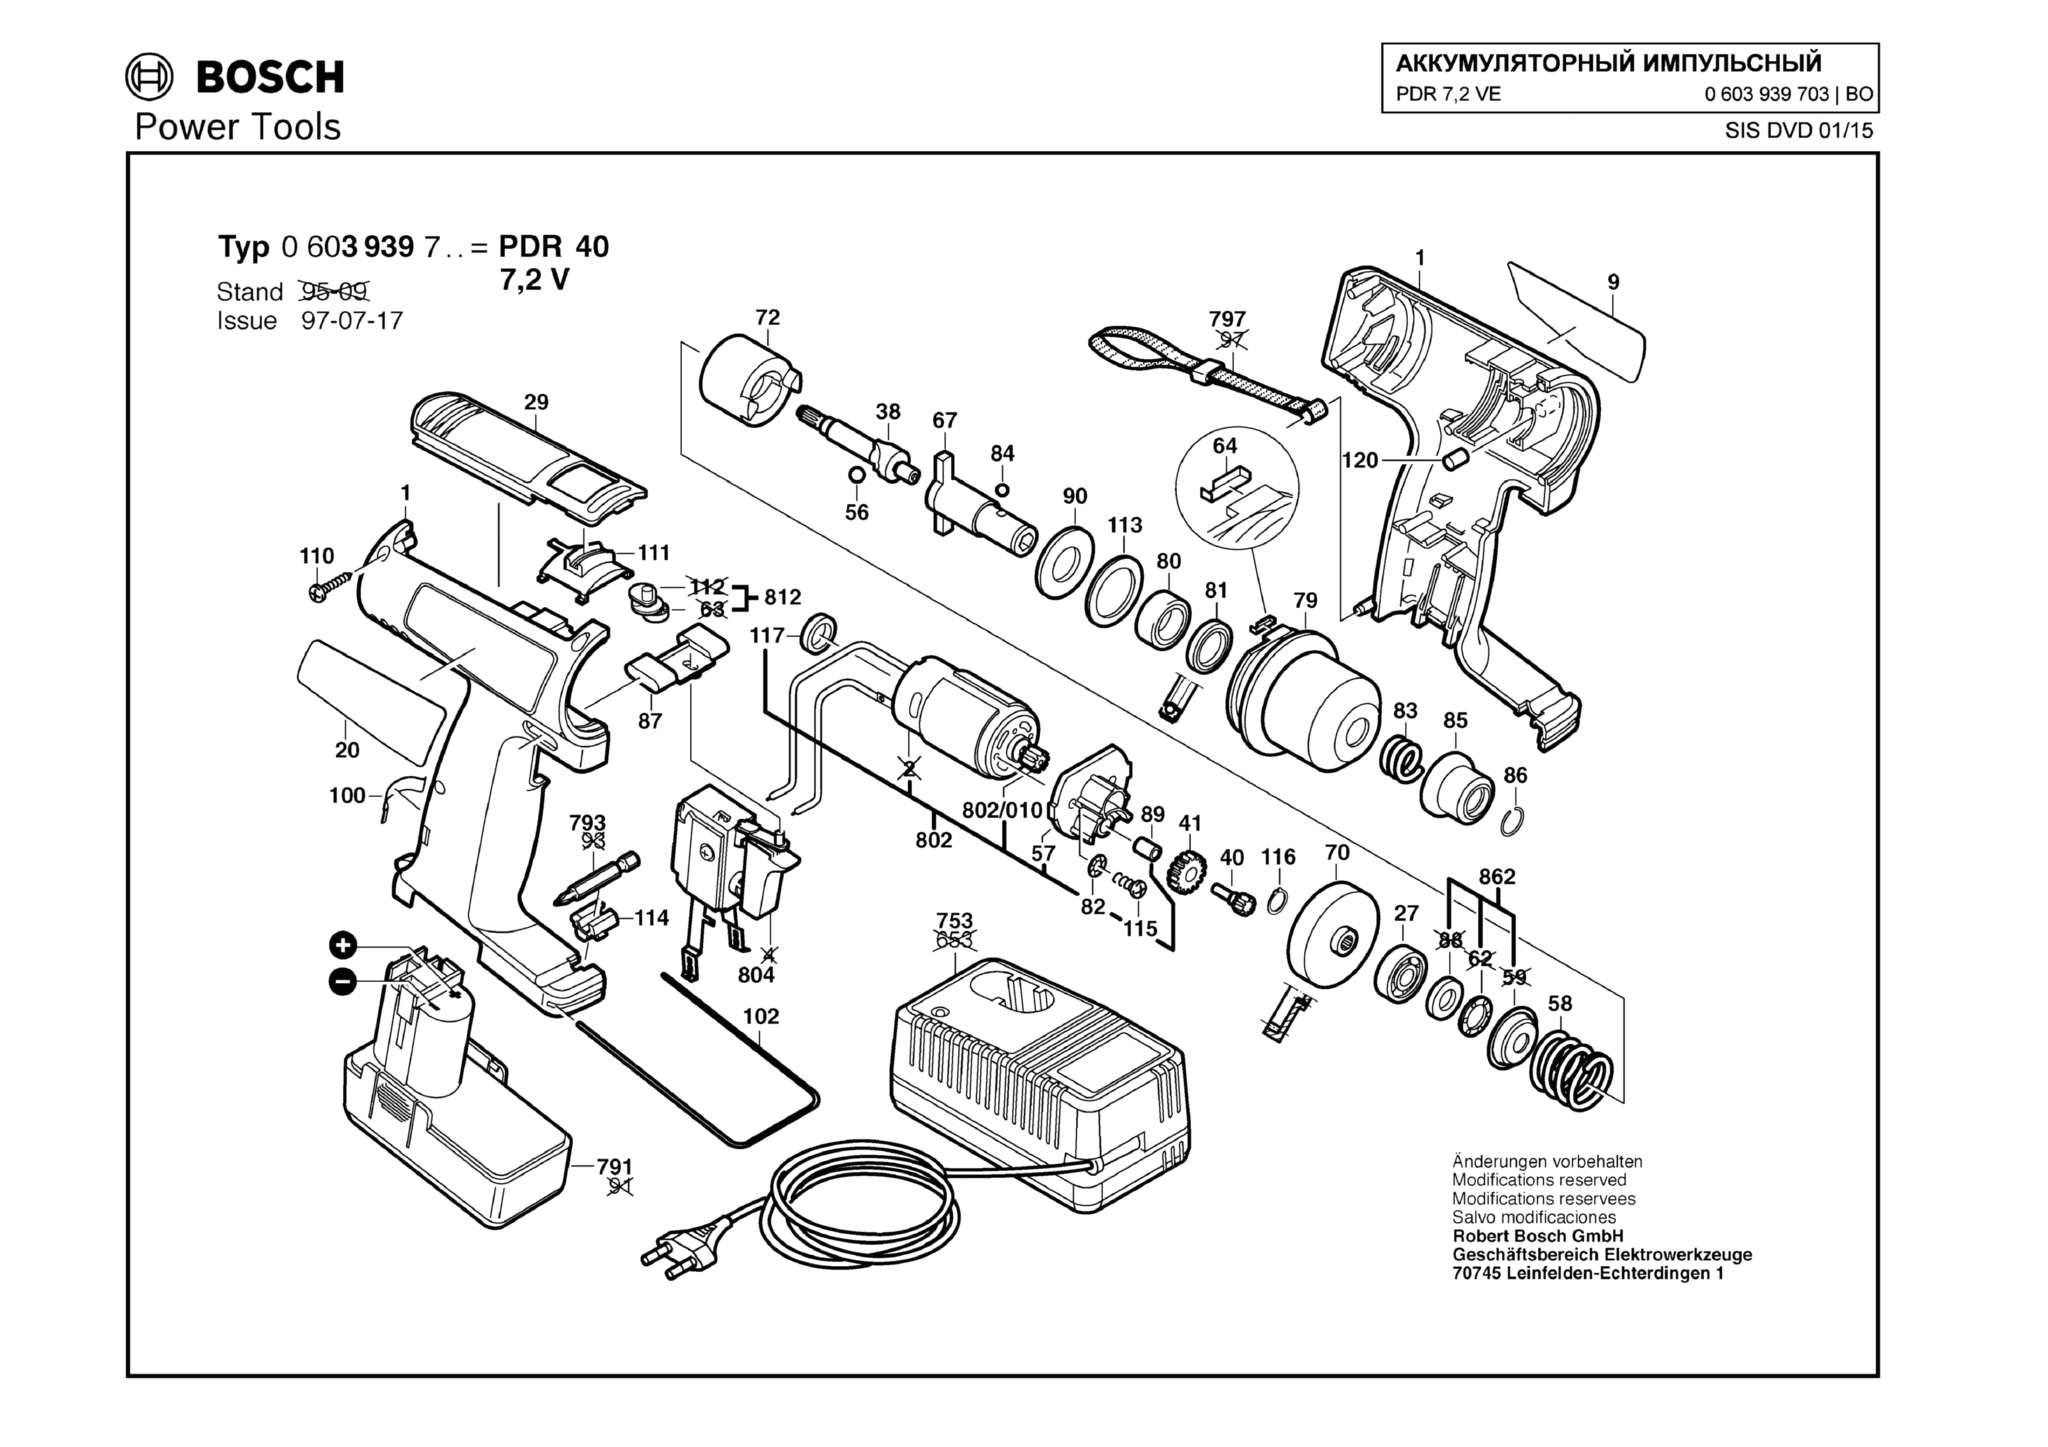 Запчасти, схема и деталировка Bosch PDR 7,2 VE (ТИП 0603939703)